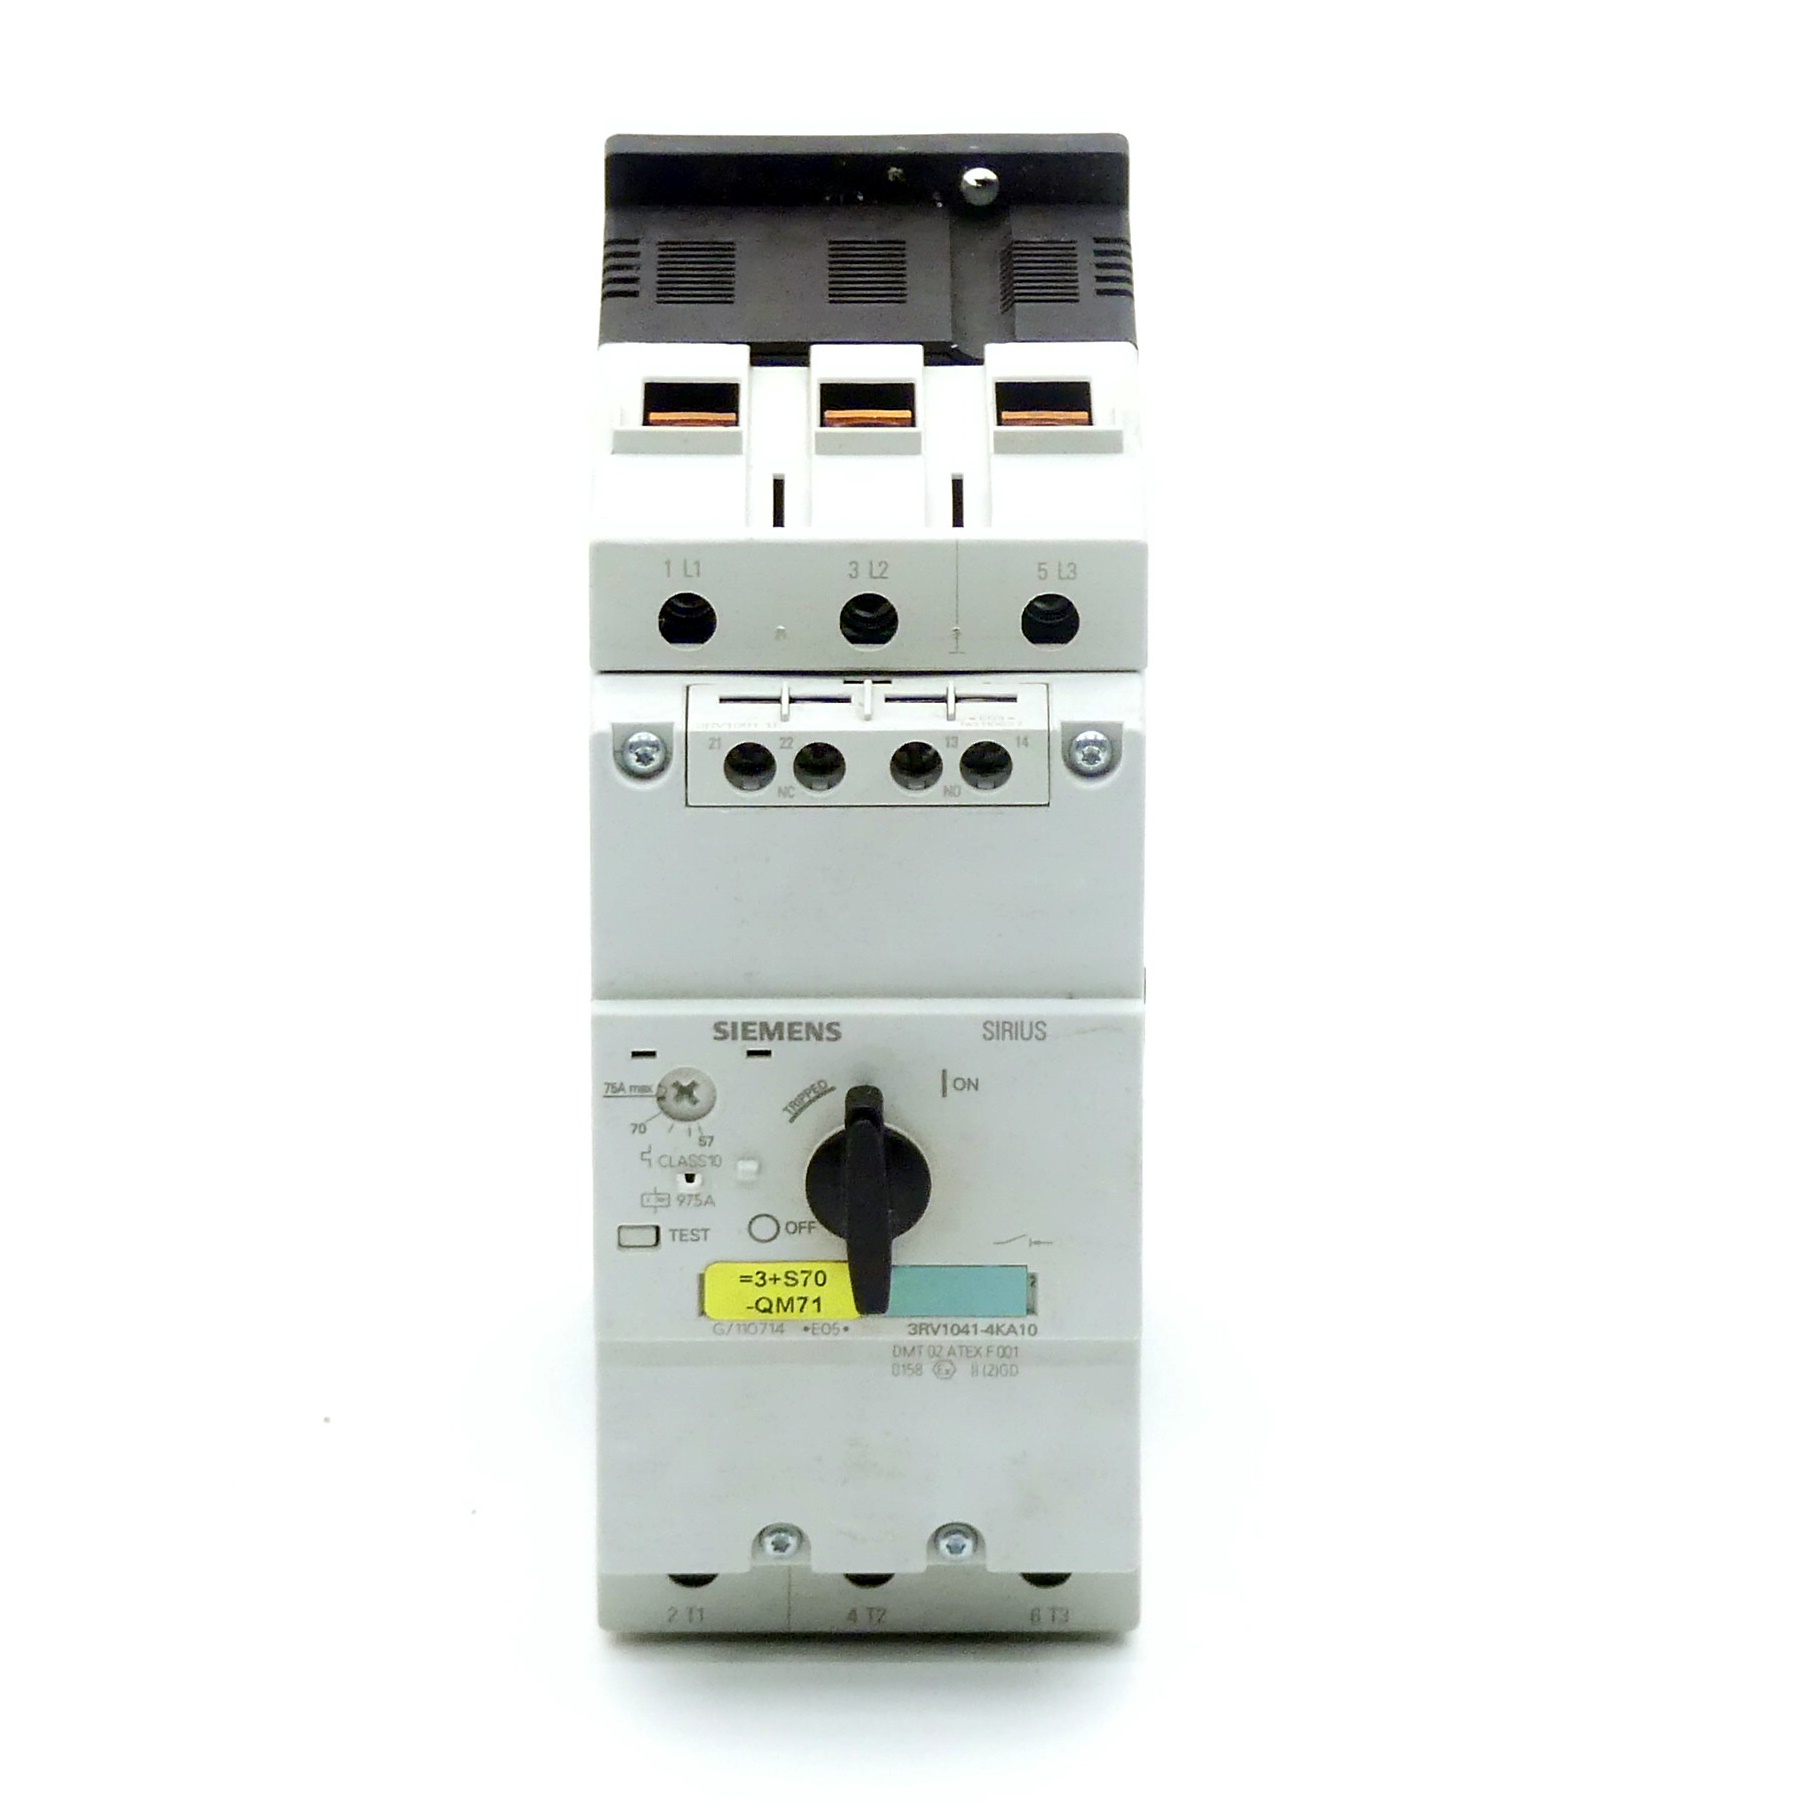 Leistungsschalter 3RV1041-4KA10 